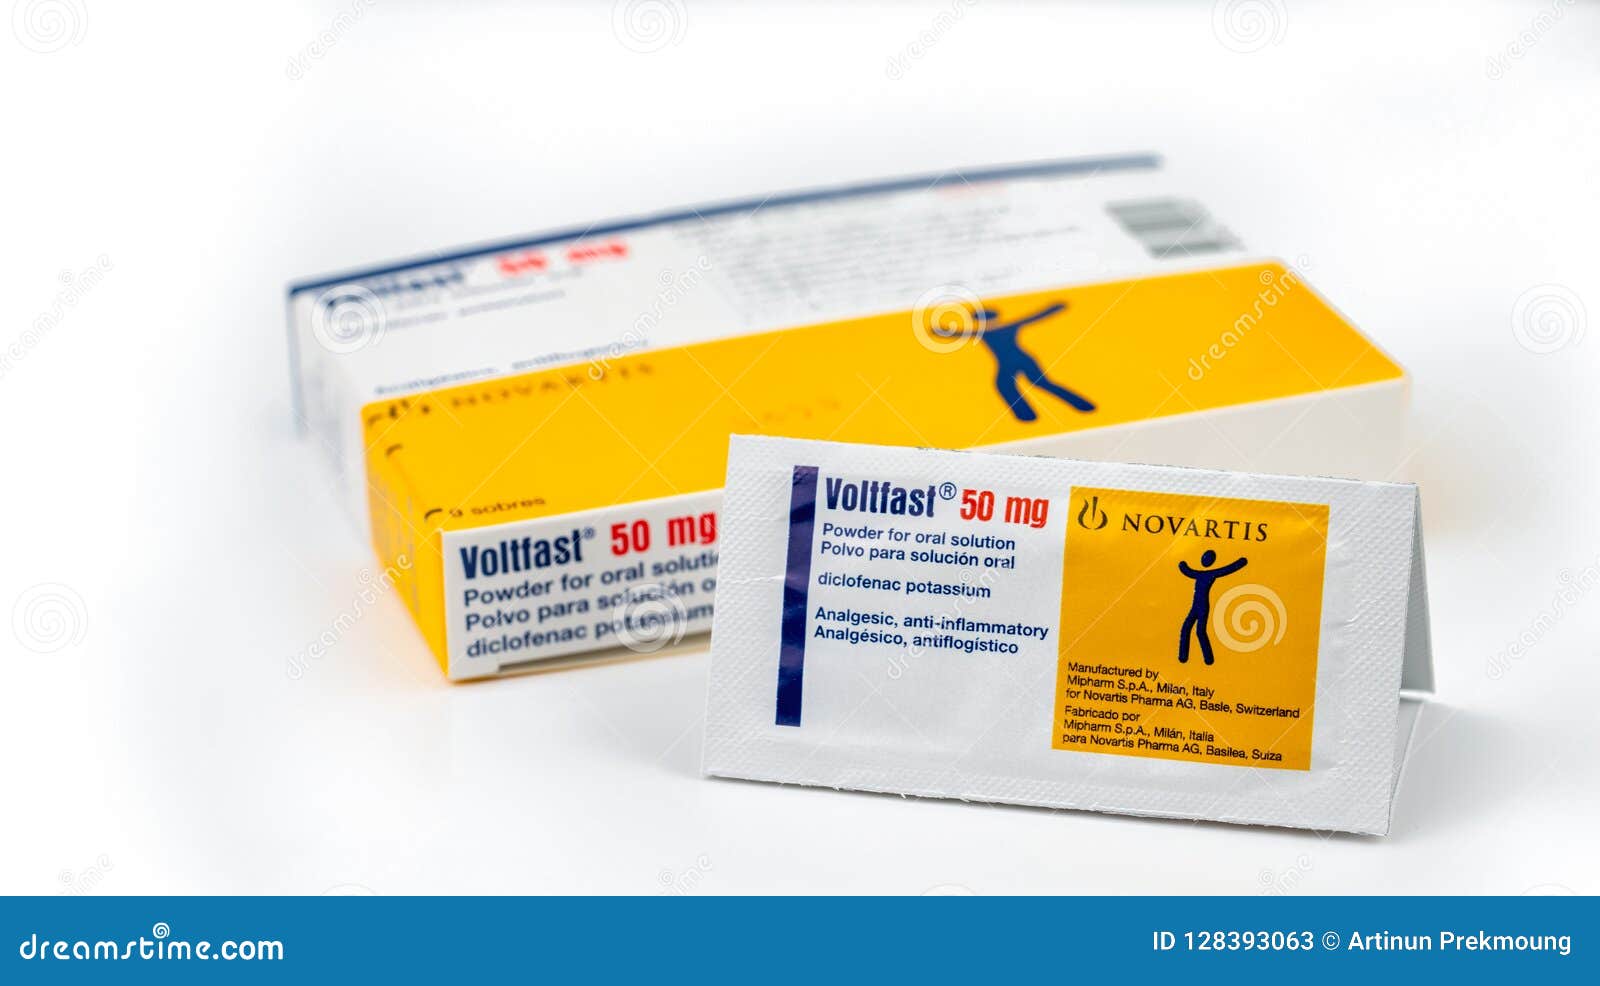 Voltfast 50 Mg. Diclofenac Potassium Product Of Novartis 